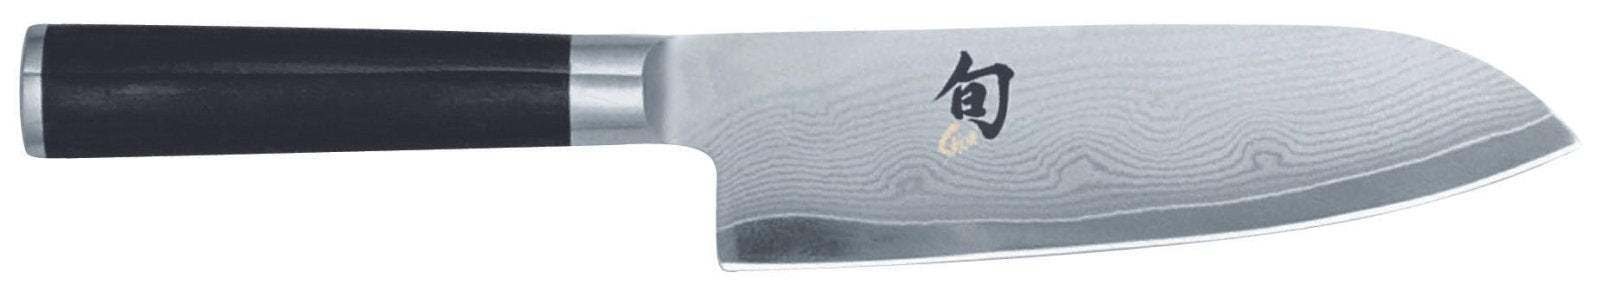 KAI Shun 18cm Santoku Knife - KAI-DM-0702 - The Cotswold Knife Company